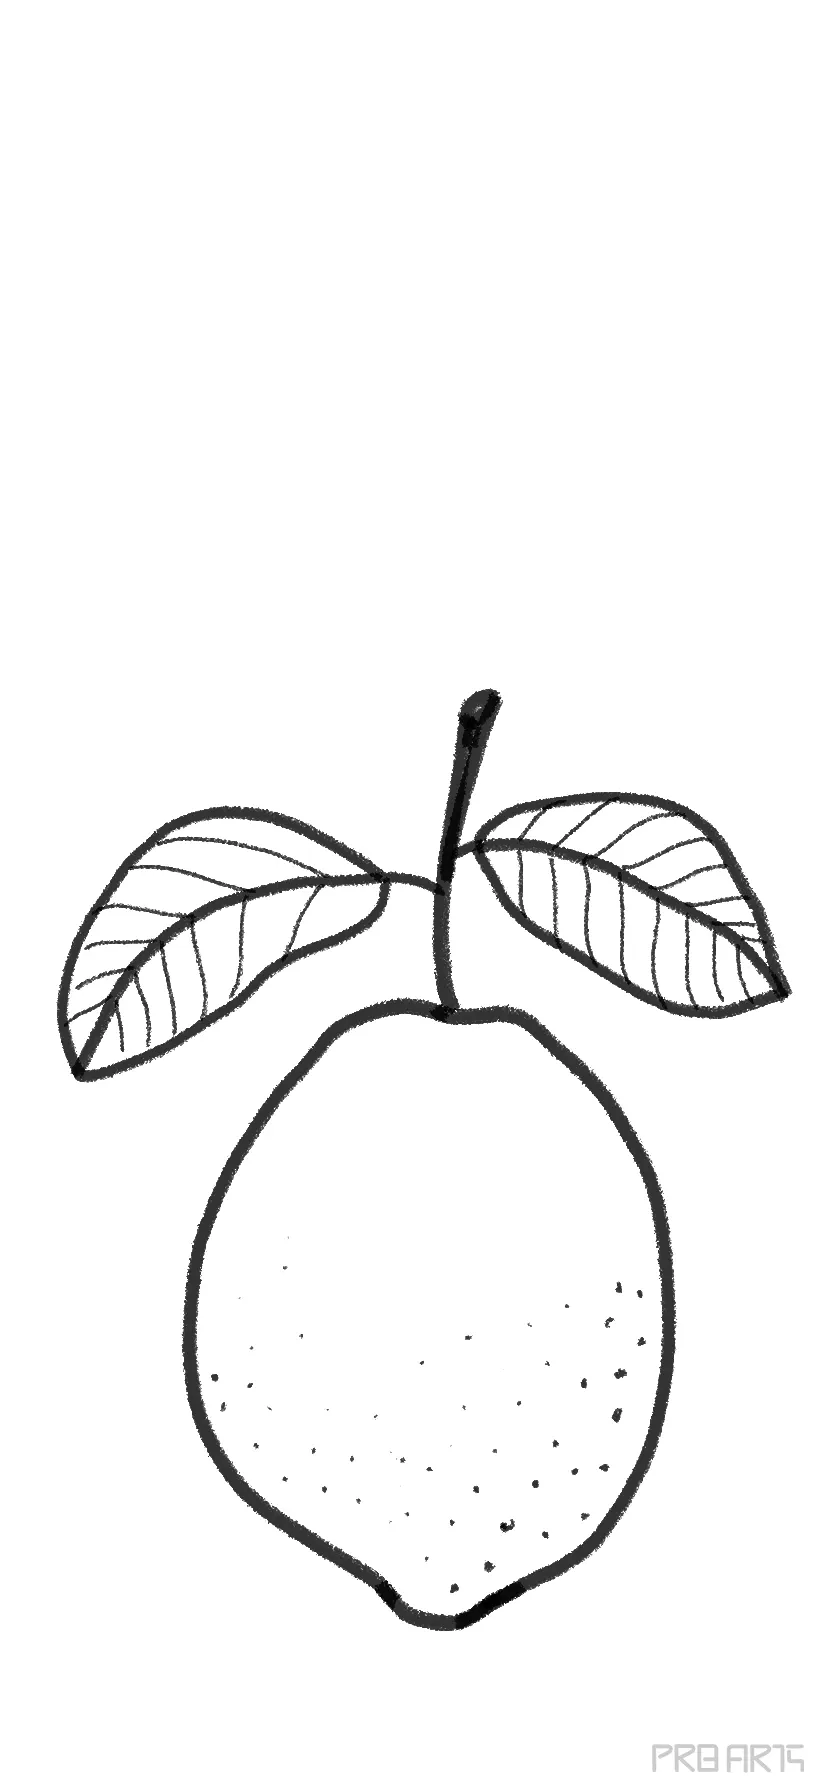 Lemon sketch on chalkboard - vector clip art